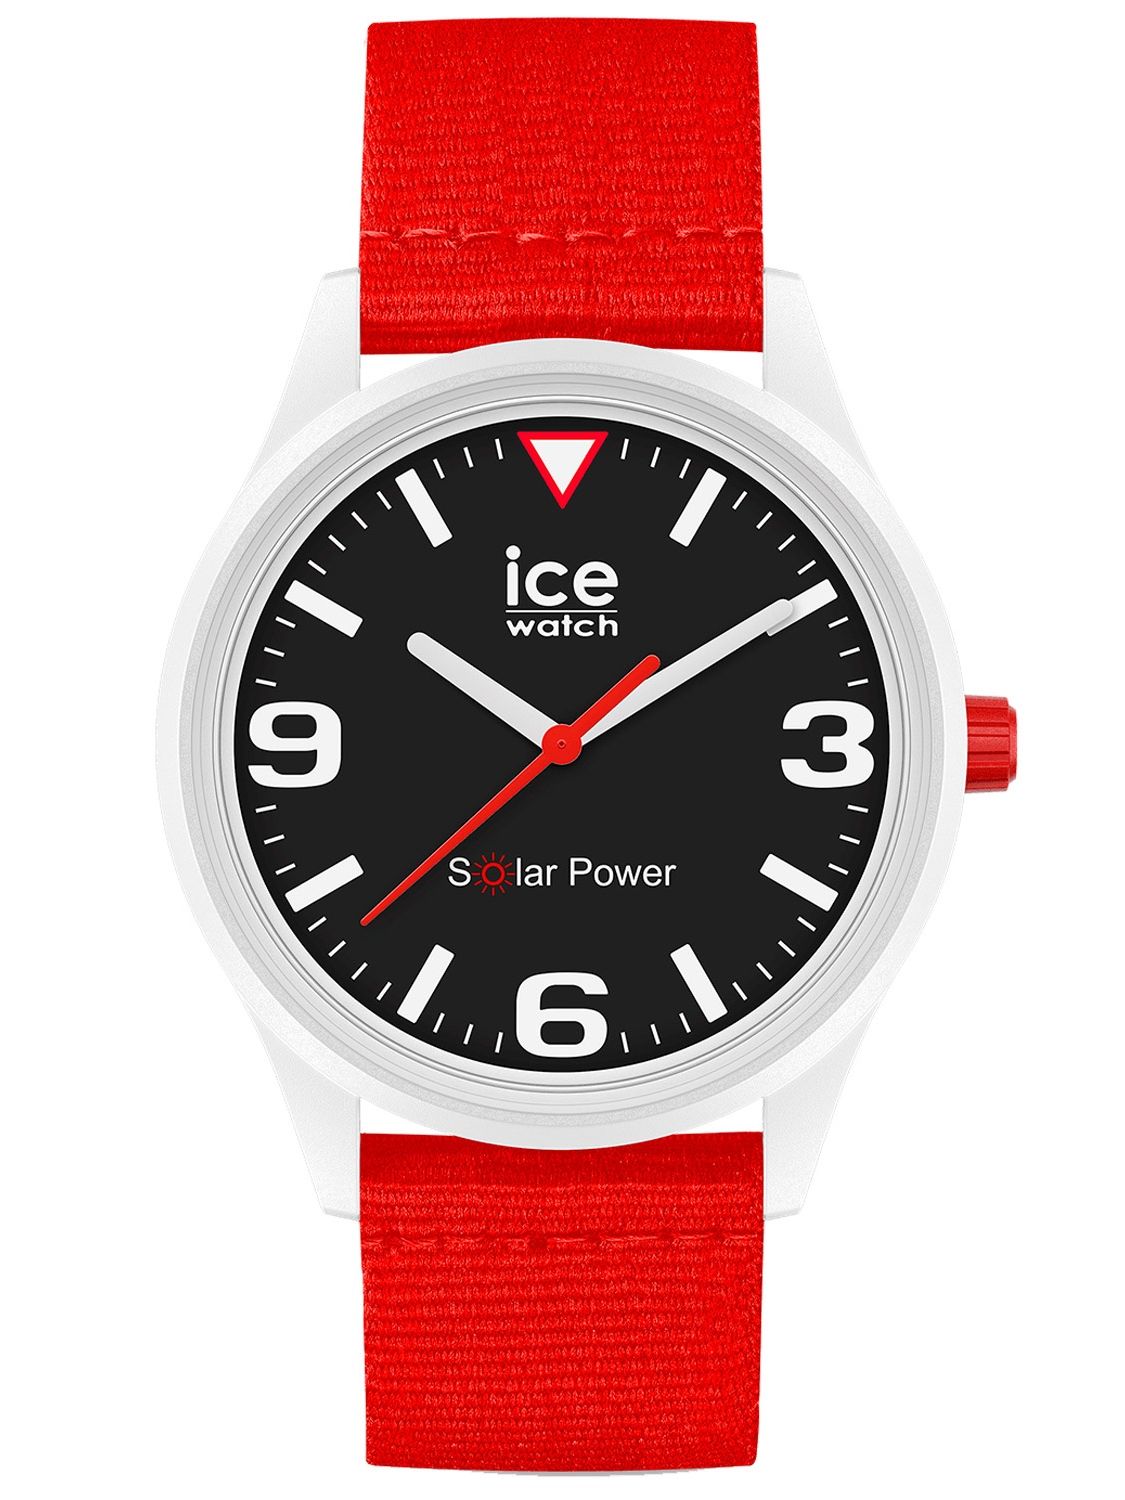 Ice-Watch Wristwatch ICE Ocean Tide Red Solar • 020061 uhrcenter